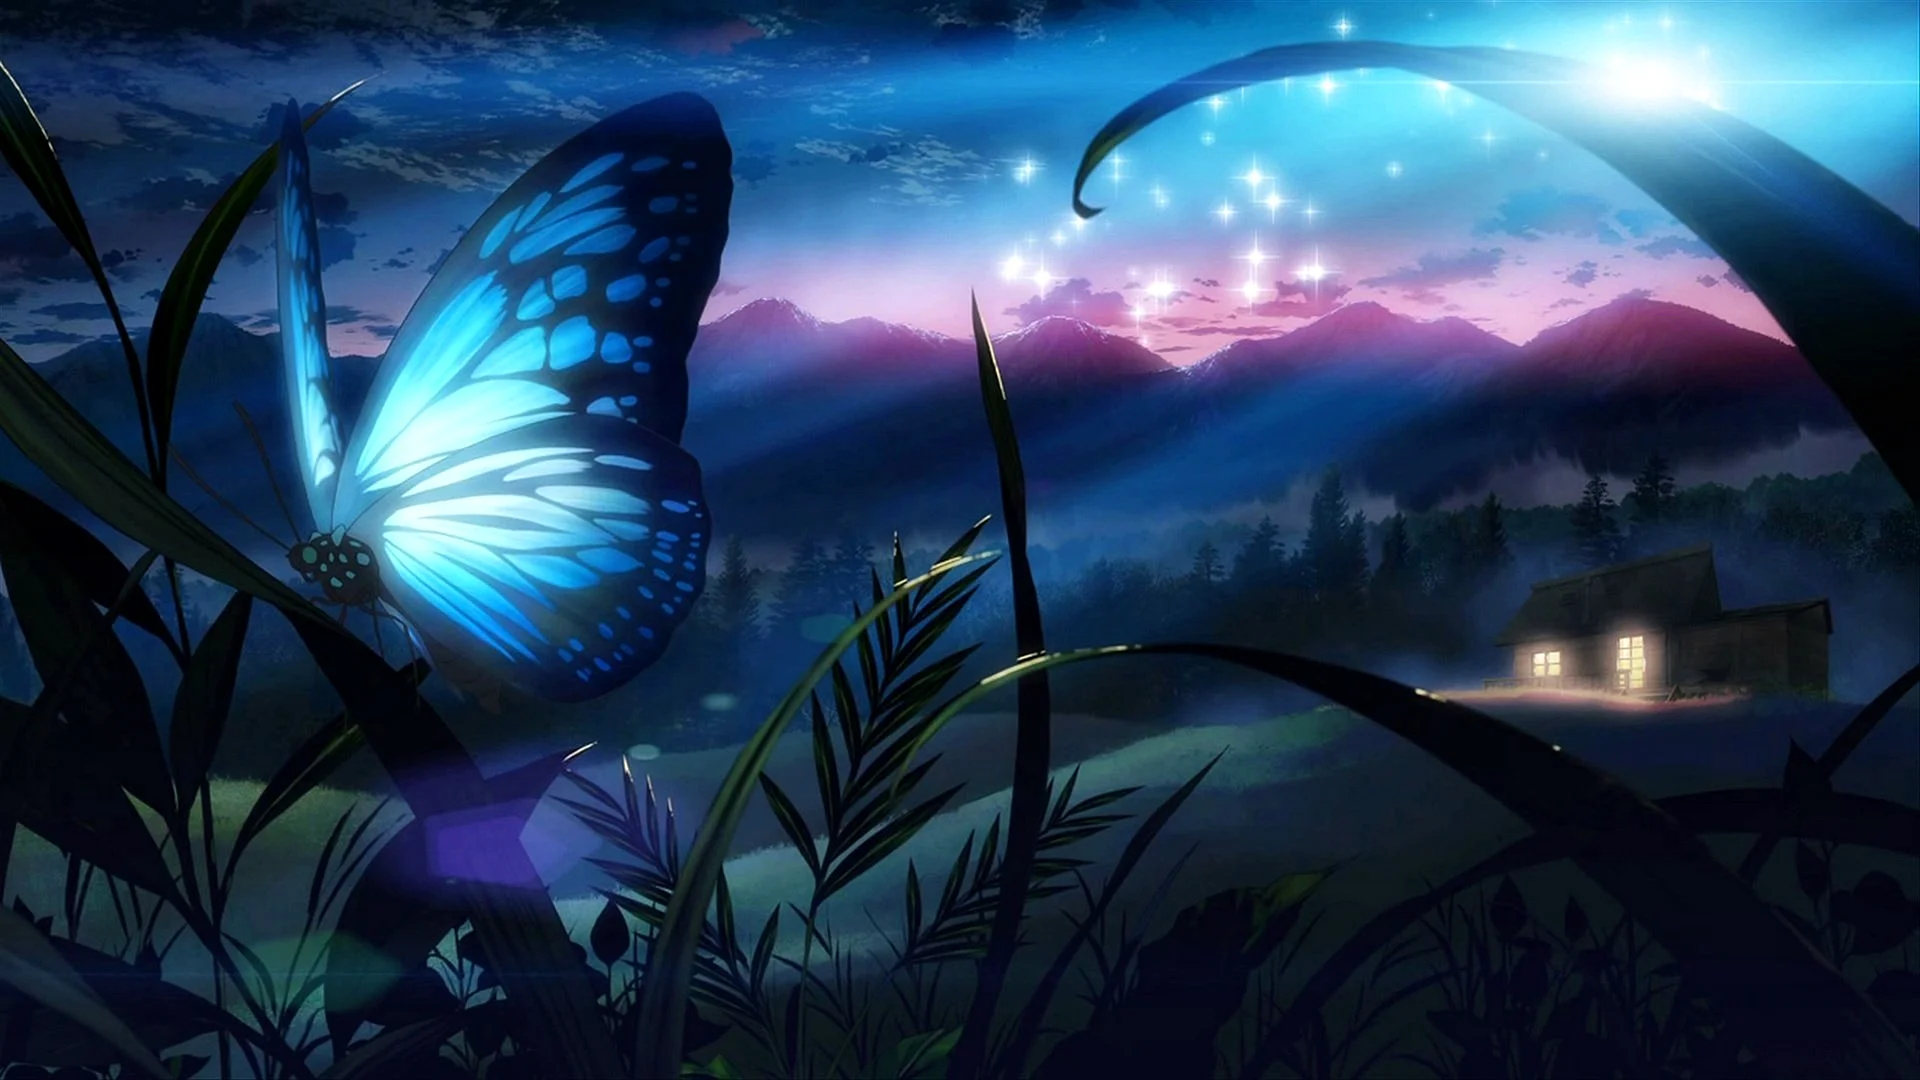 Anime Butterfly Wallpaper